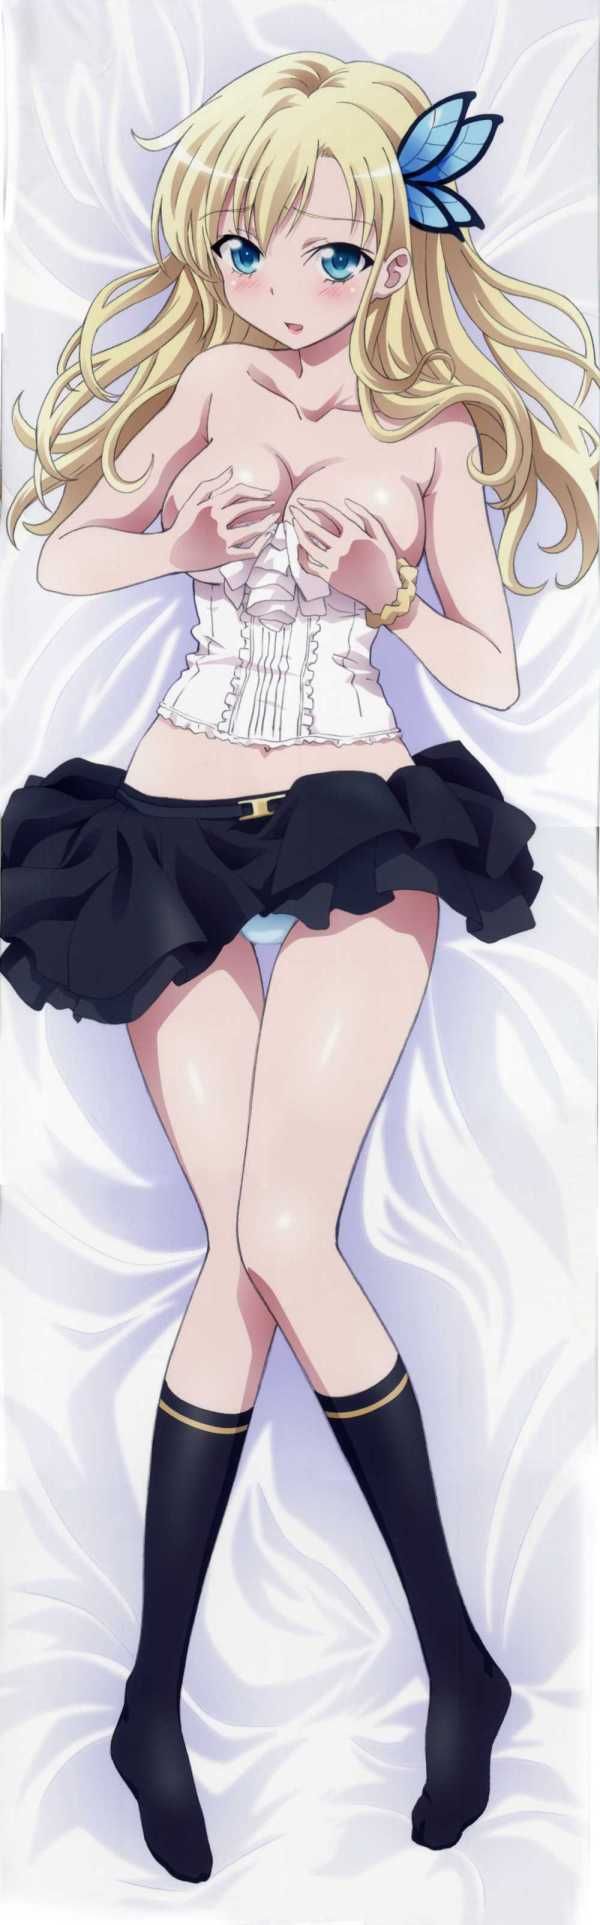 best images on pinterest anime girls manga anime